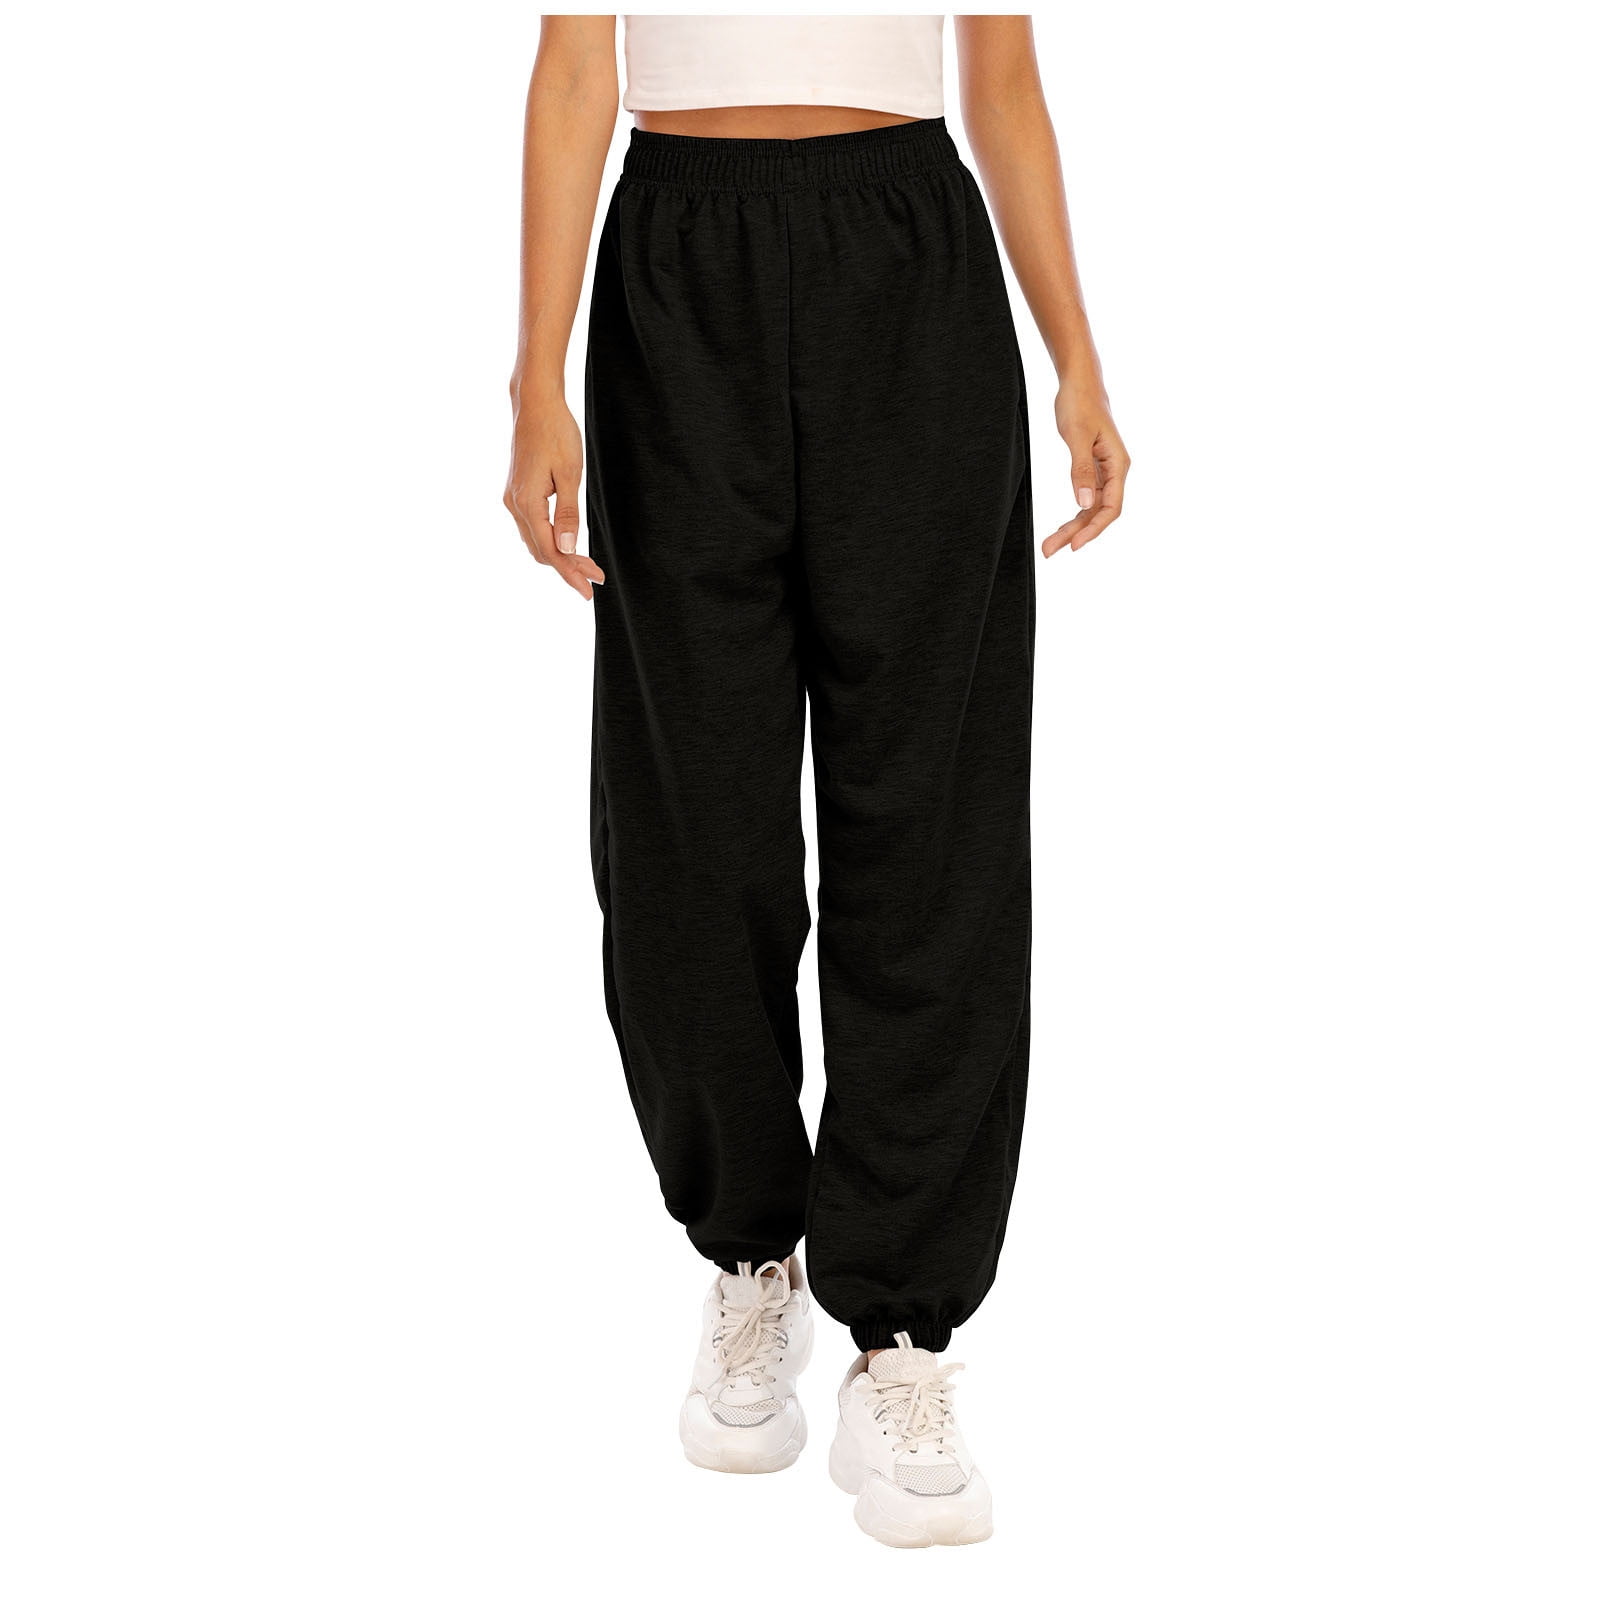 MRULIC pants for women Trousers Sweatpants Jogger Women Pants Jogging  Sports Pants Pants Black + XL 